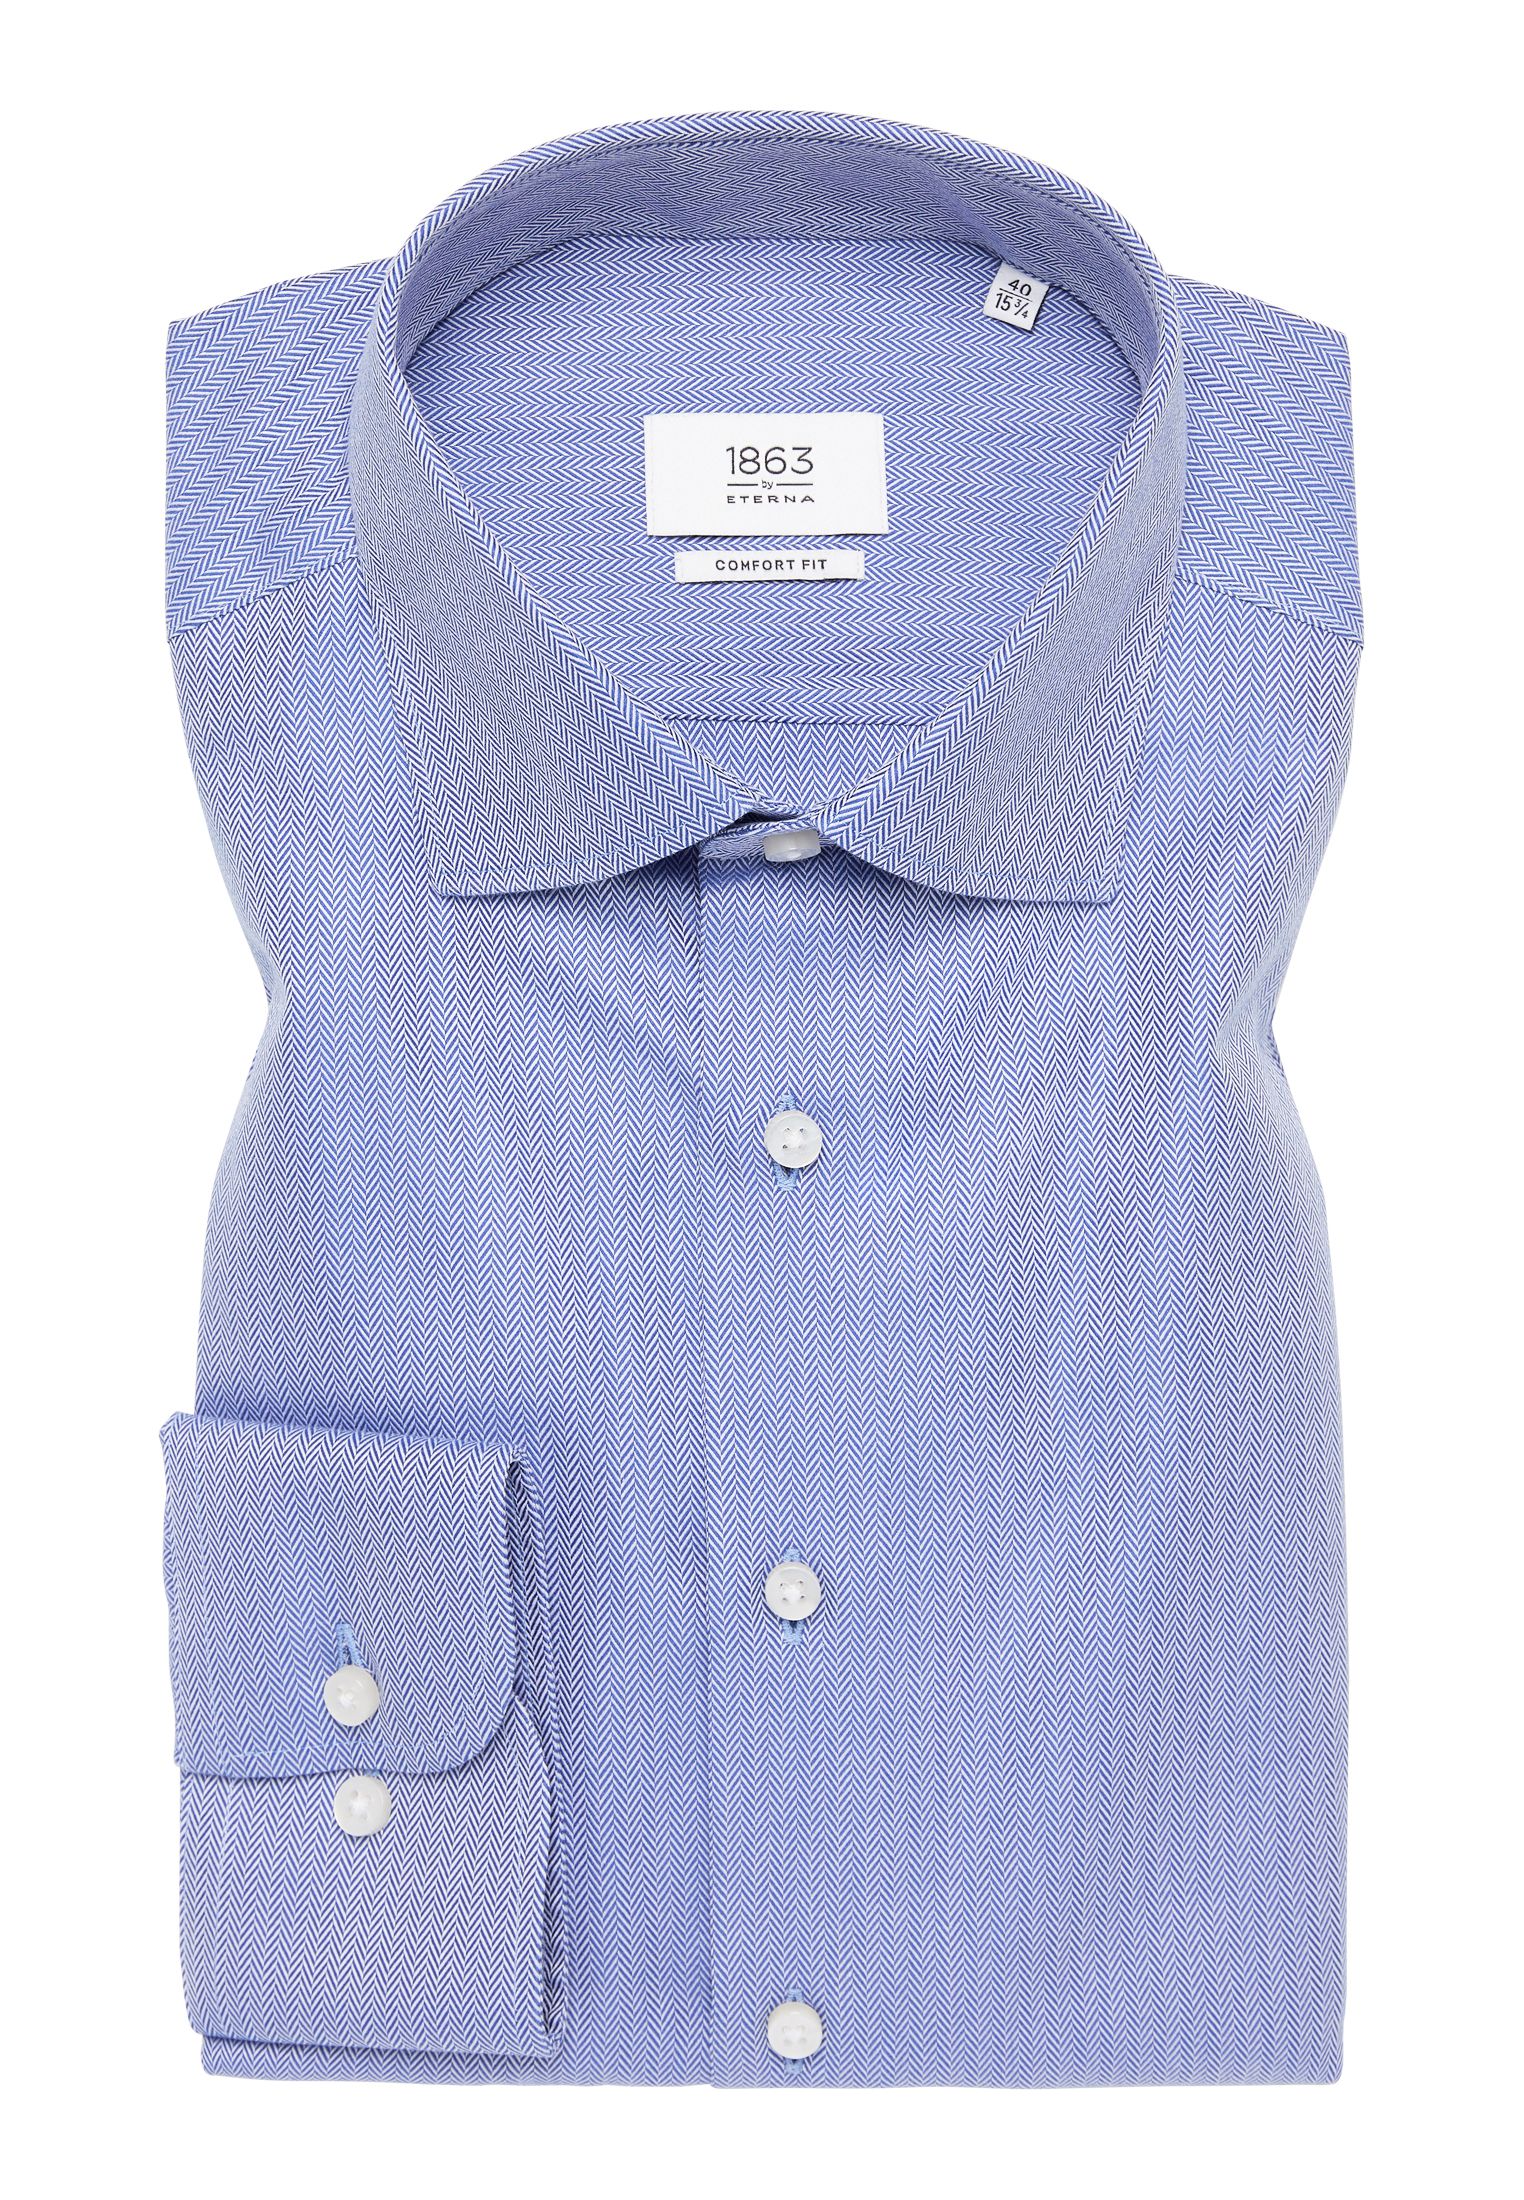 Shirt blue royal | | in plain blue | FIT 40 royal sleeve long | 1SH12506-01-51-40-1/1 COMFORT